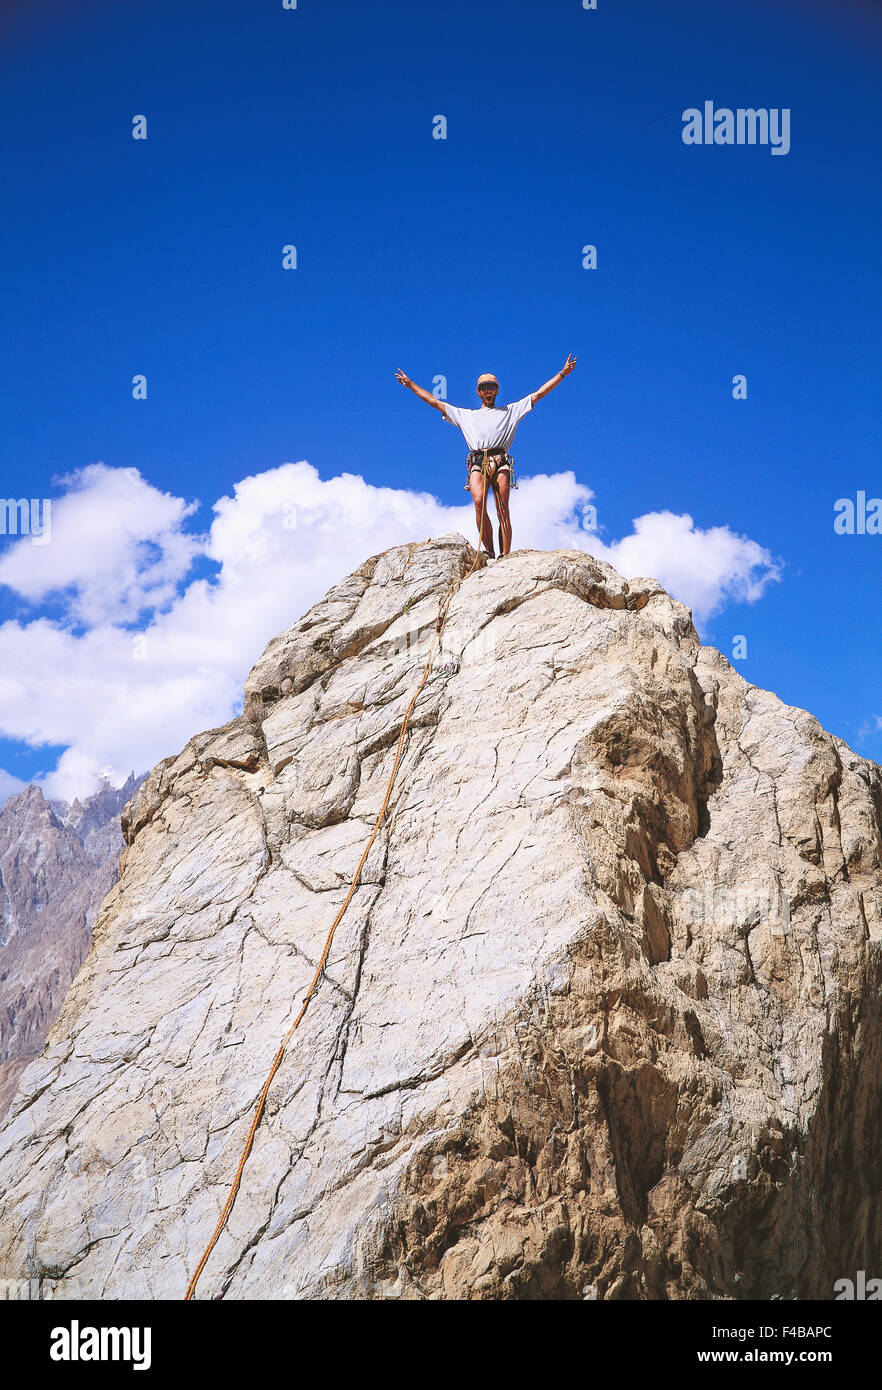 Mountain climbers cheering on a mountain top. Stock Photo